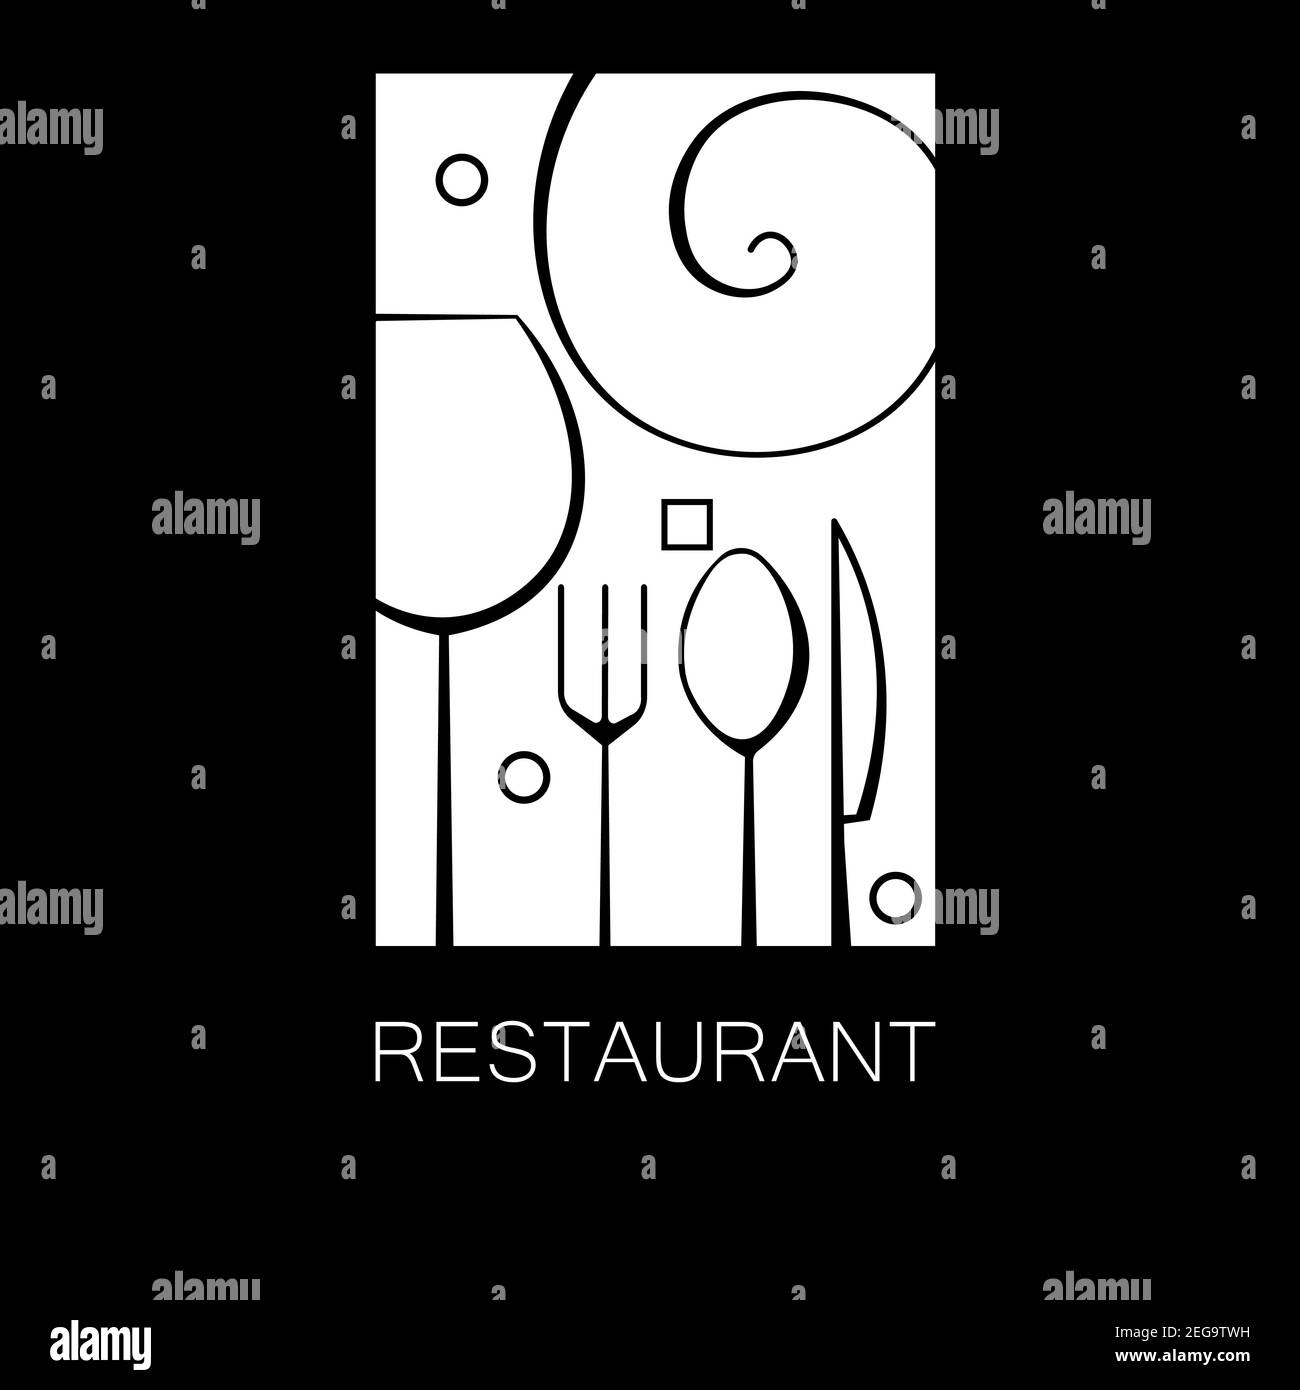 https://c8.alamy.com/compes/2eg9twh/logotipo-de-restaurante-negro-minimo-con-cubiertos-contornos-3-2eg9twh.jpg